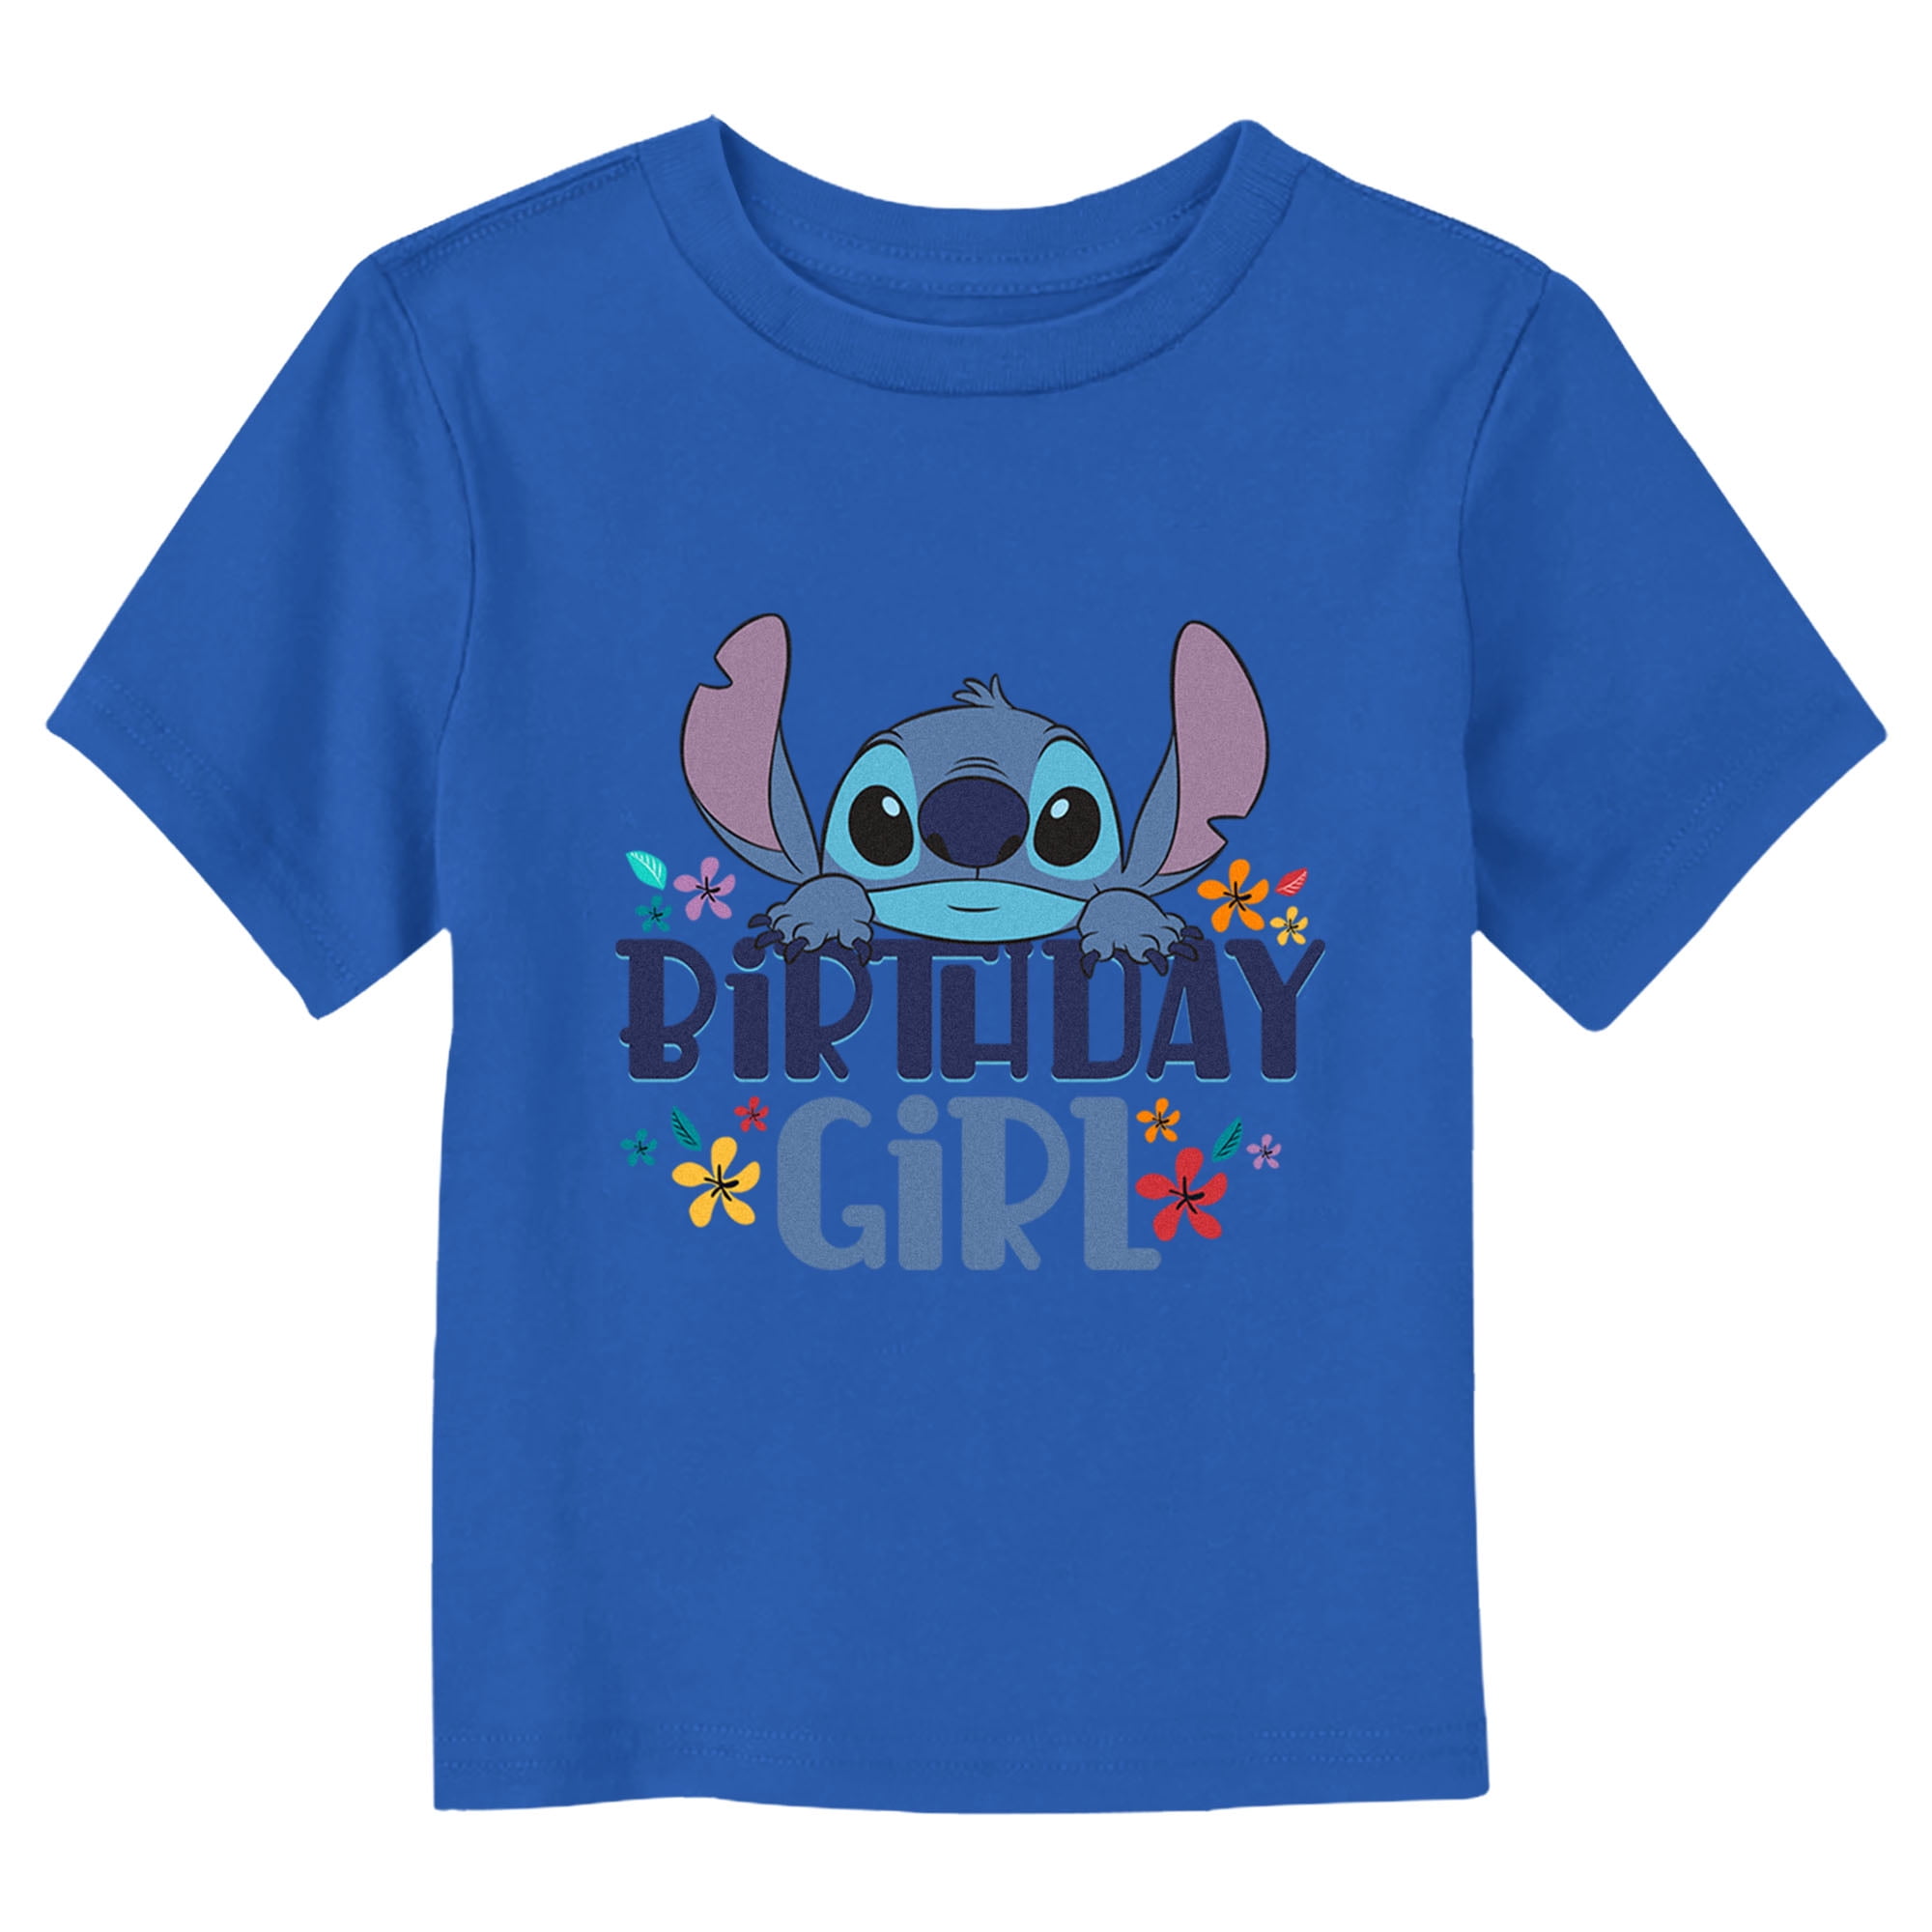 Toddler's Lilo & Stitch Birthday Girl Stitch Graphic Tee Royal Blue 3T 